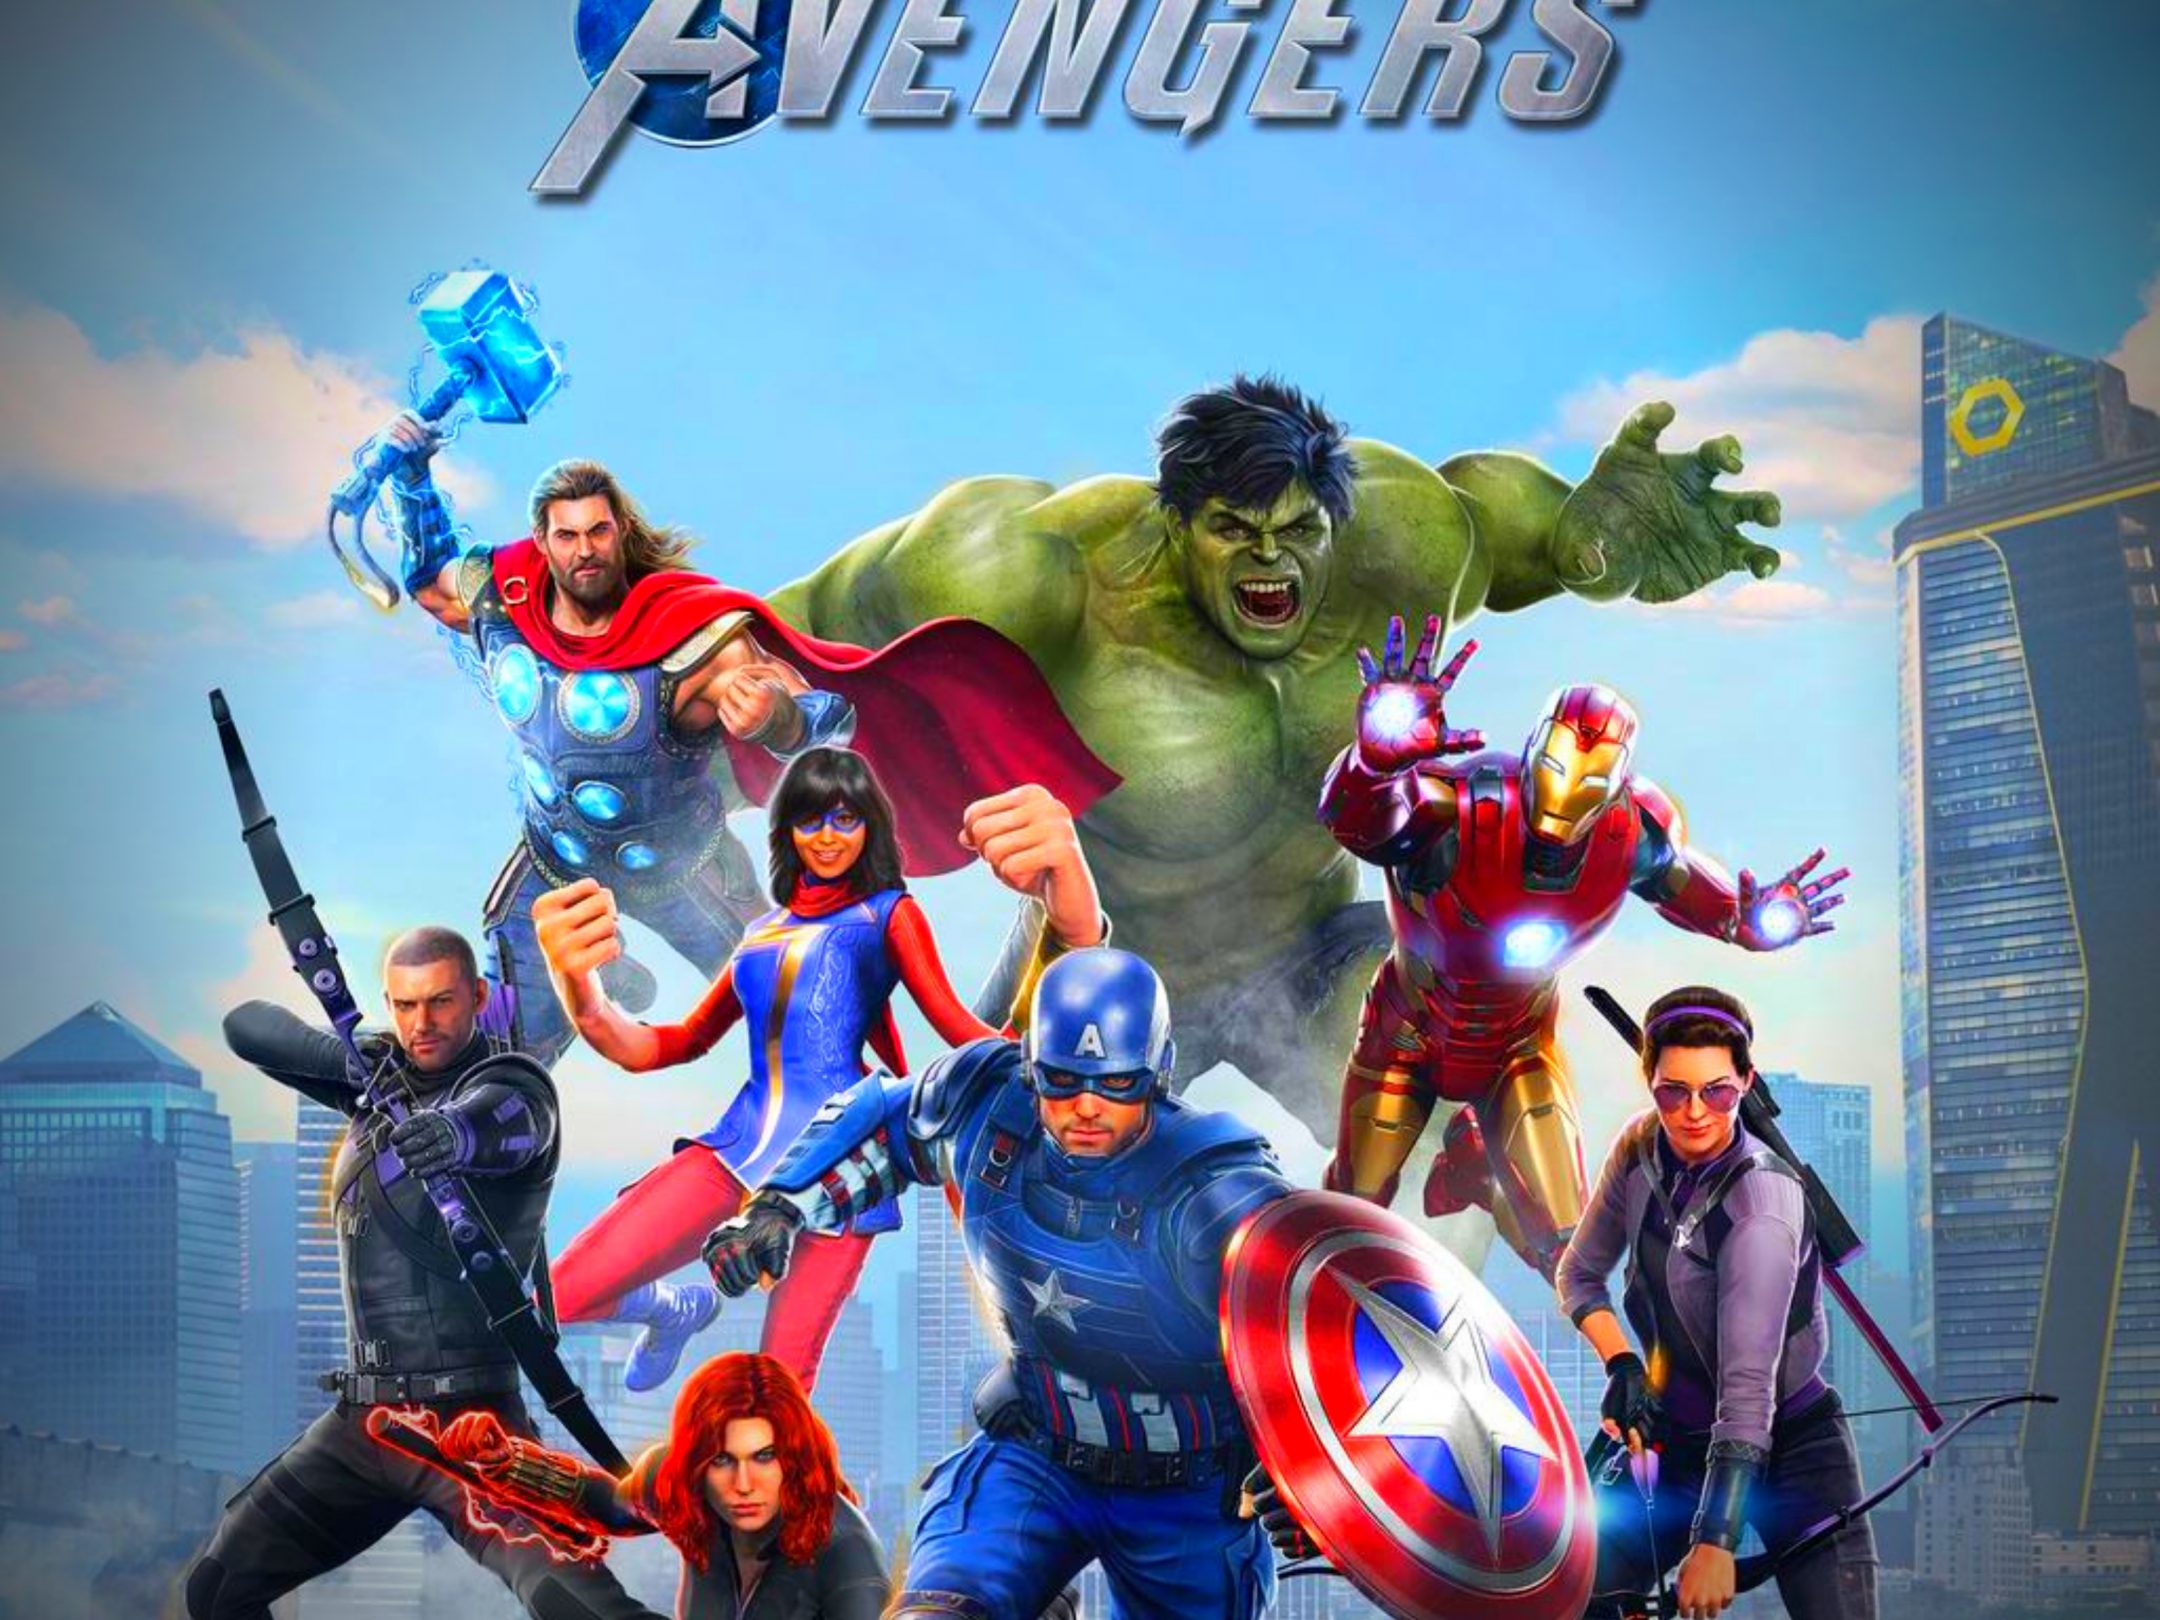 2160x1620 iPad wallpaper 4k Marvel Avengers iPad Wallpaper 2160x1620 pixels resolution